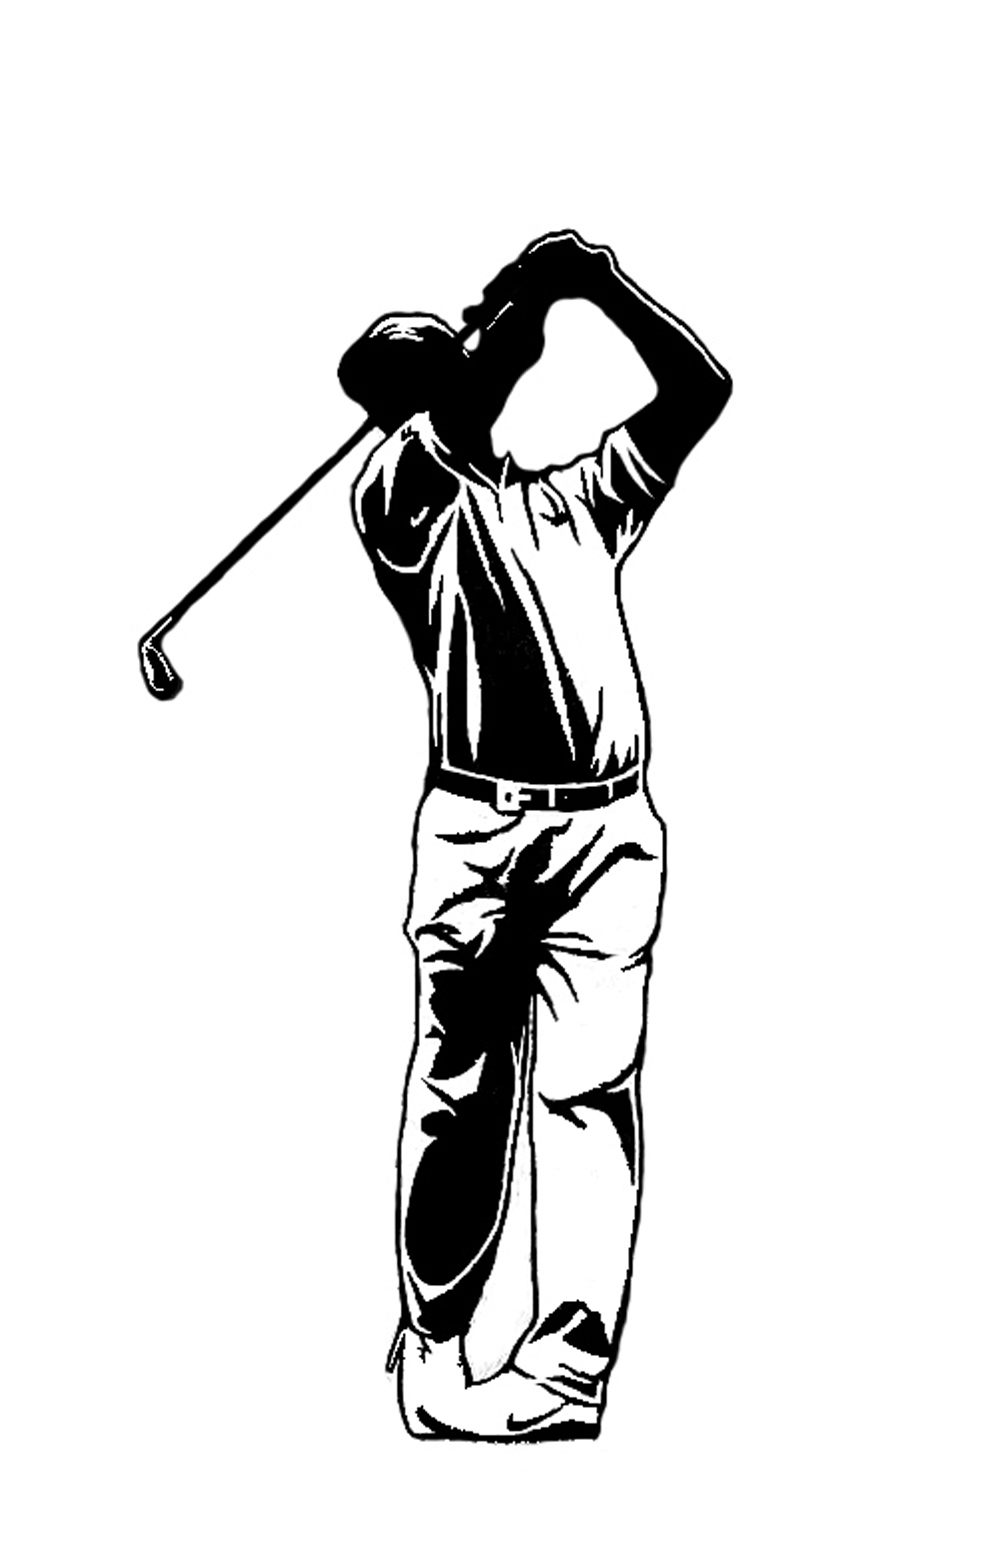 Chinese Paper Cut Art - Chinese Paper Cutting - Golfer by Rock Xu Yi